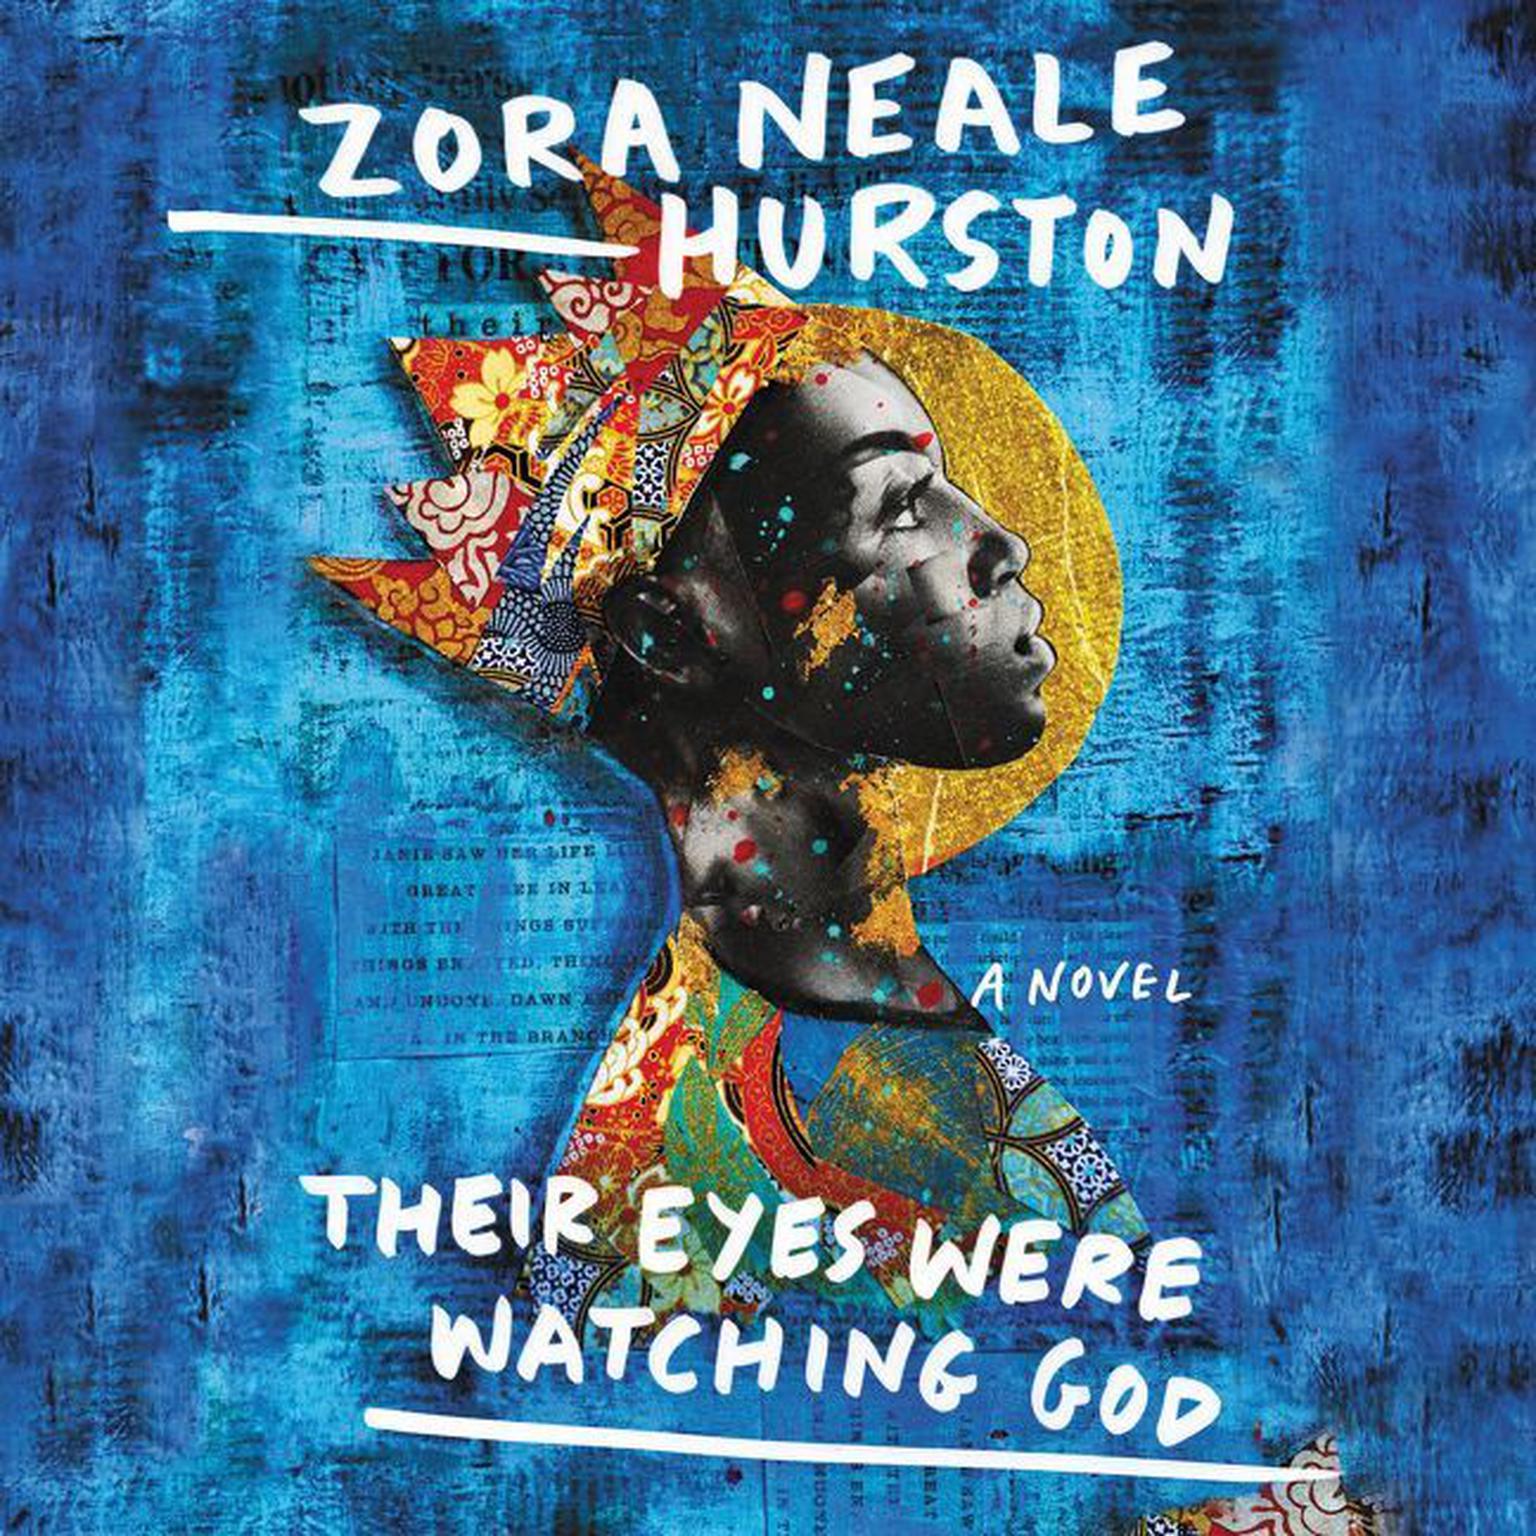 Their Eyes Were Watching God Audiobook, by Zora Neale Hurston